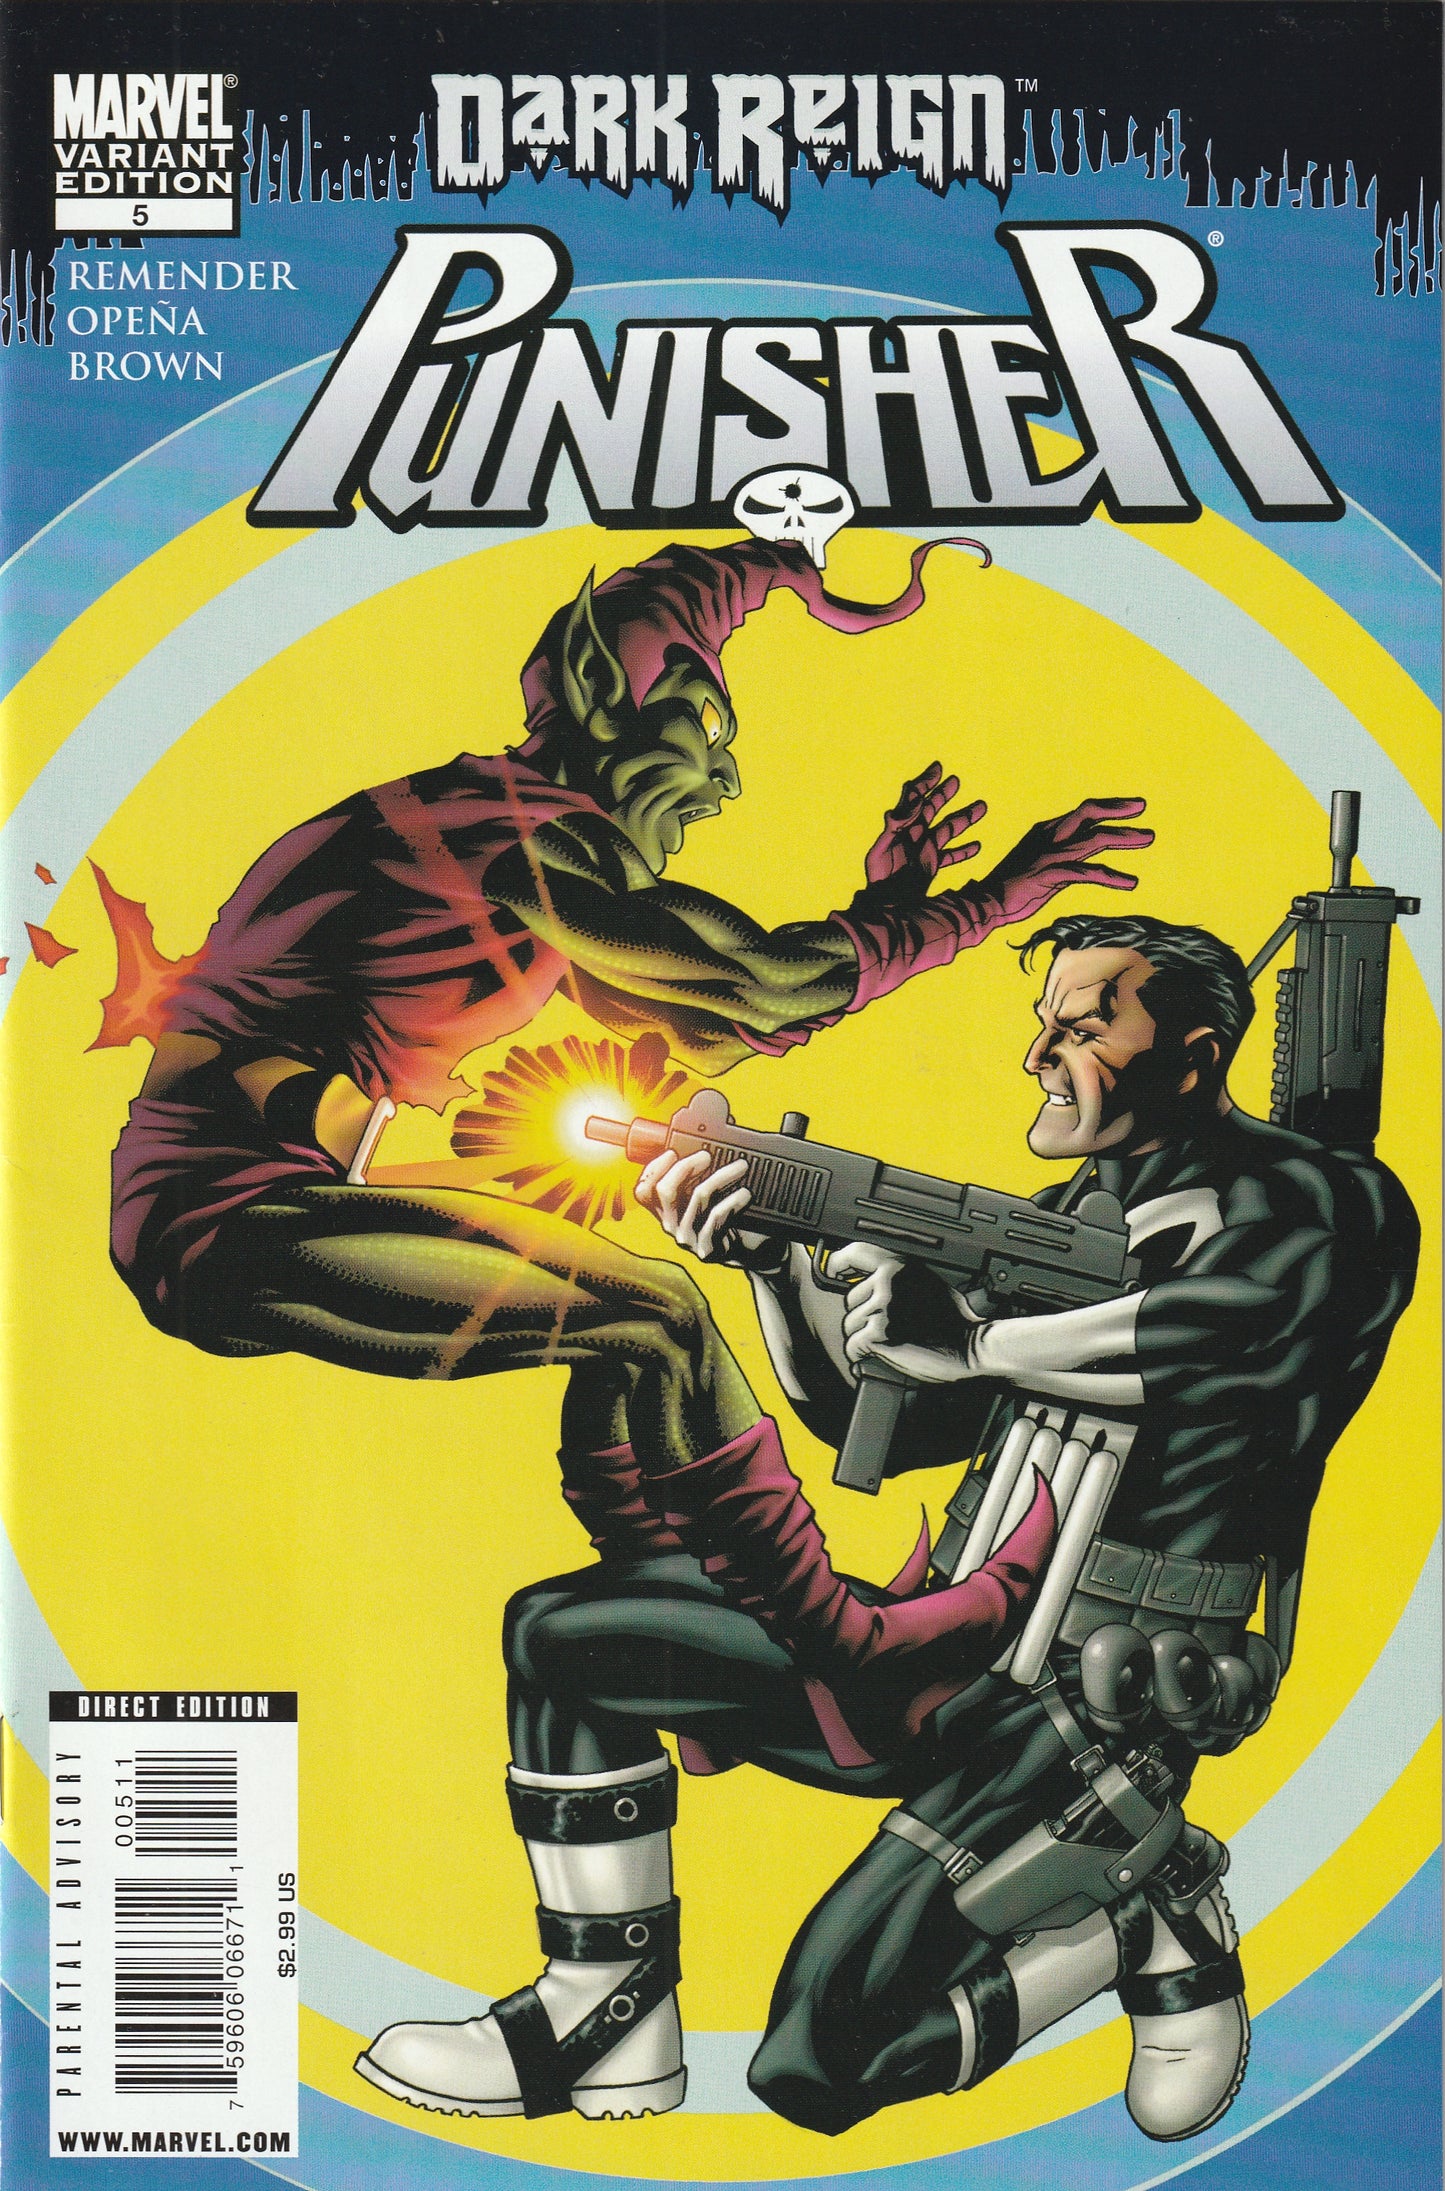 The Punisher #5 (Vol 8, 2009) - Target Green Goblin Variant Cover